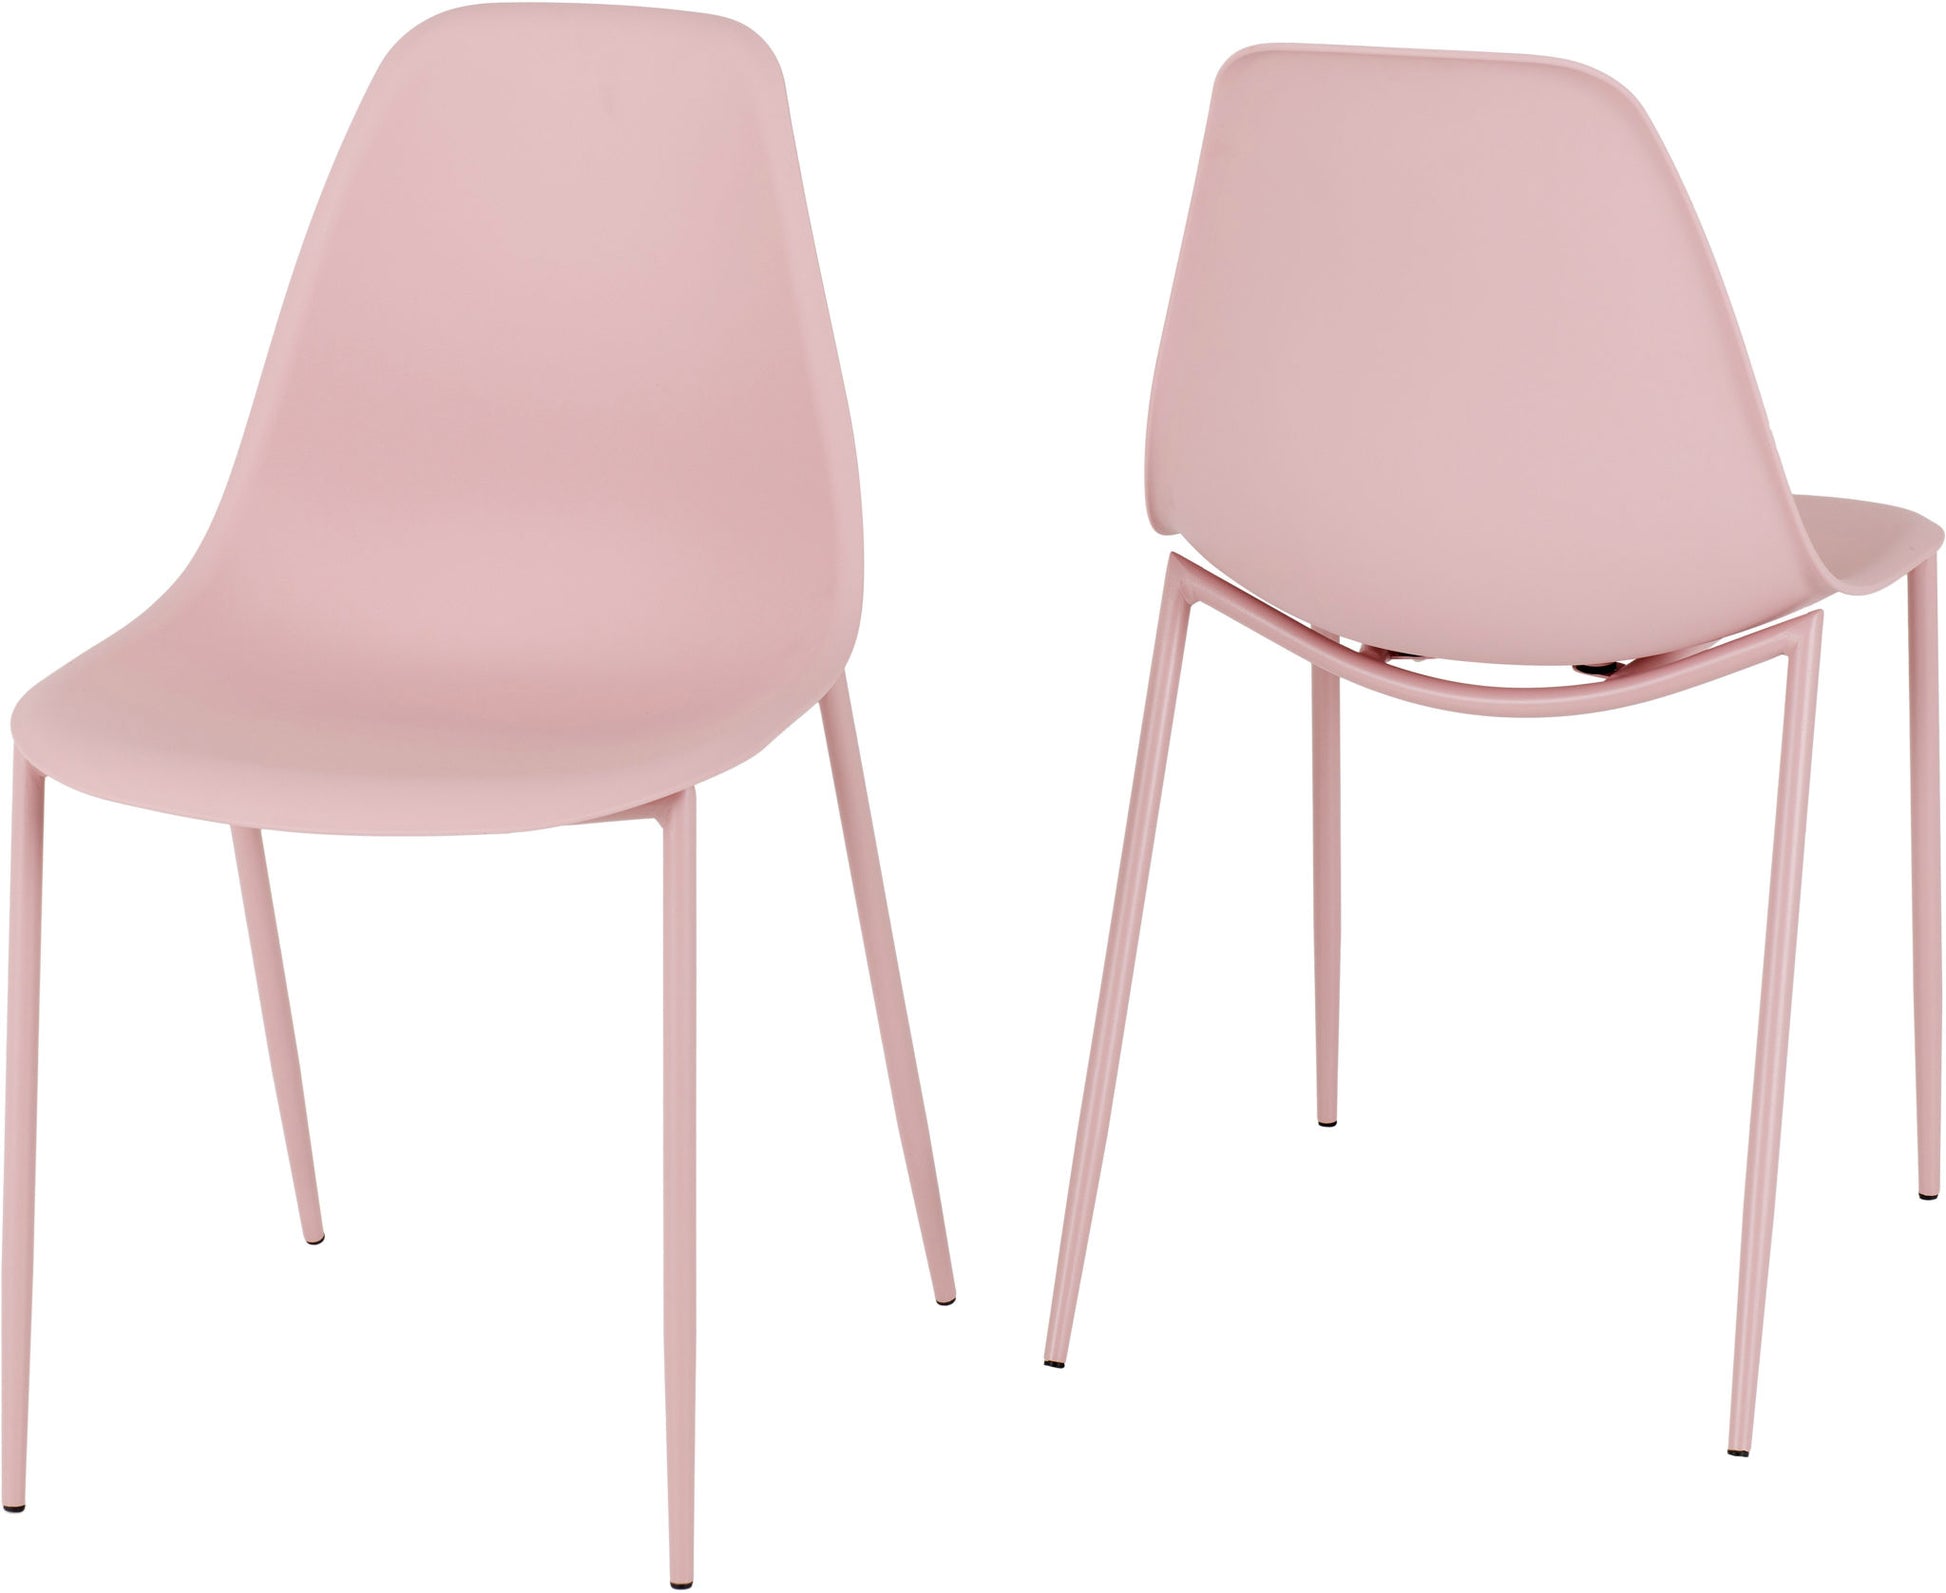 Lindon Chair - Pink